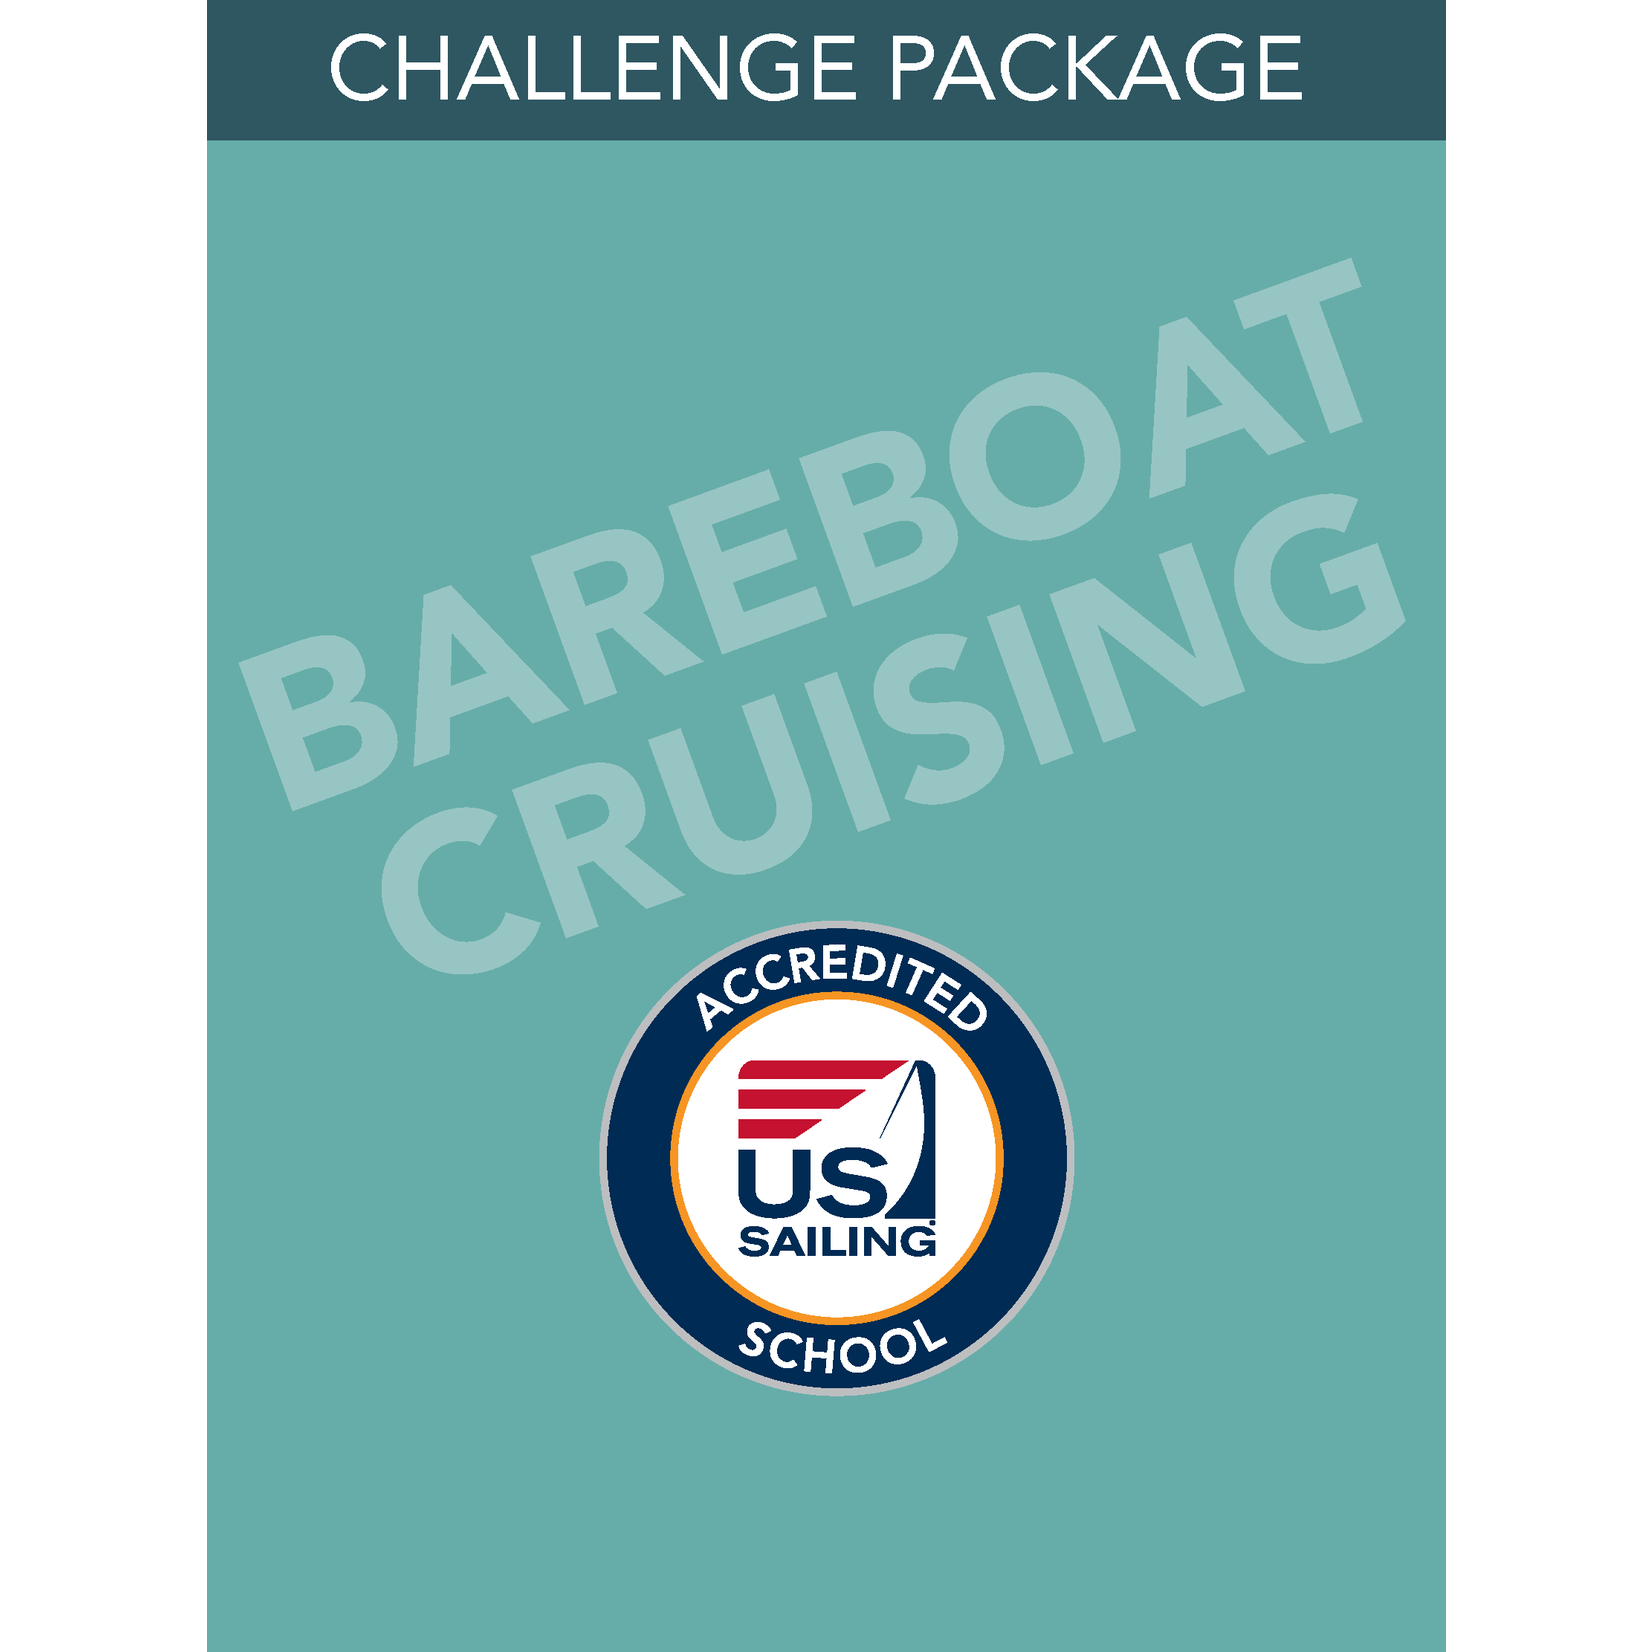 Bareboat Cruising- Challenge Package